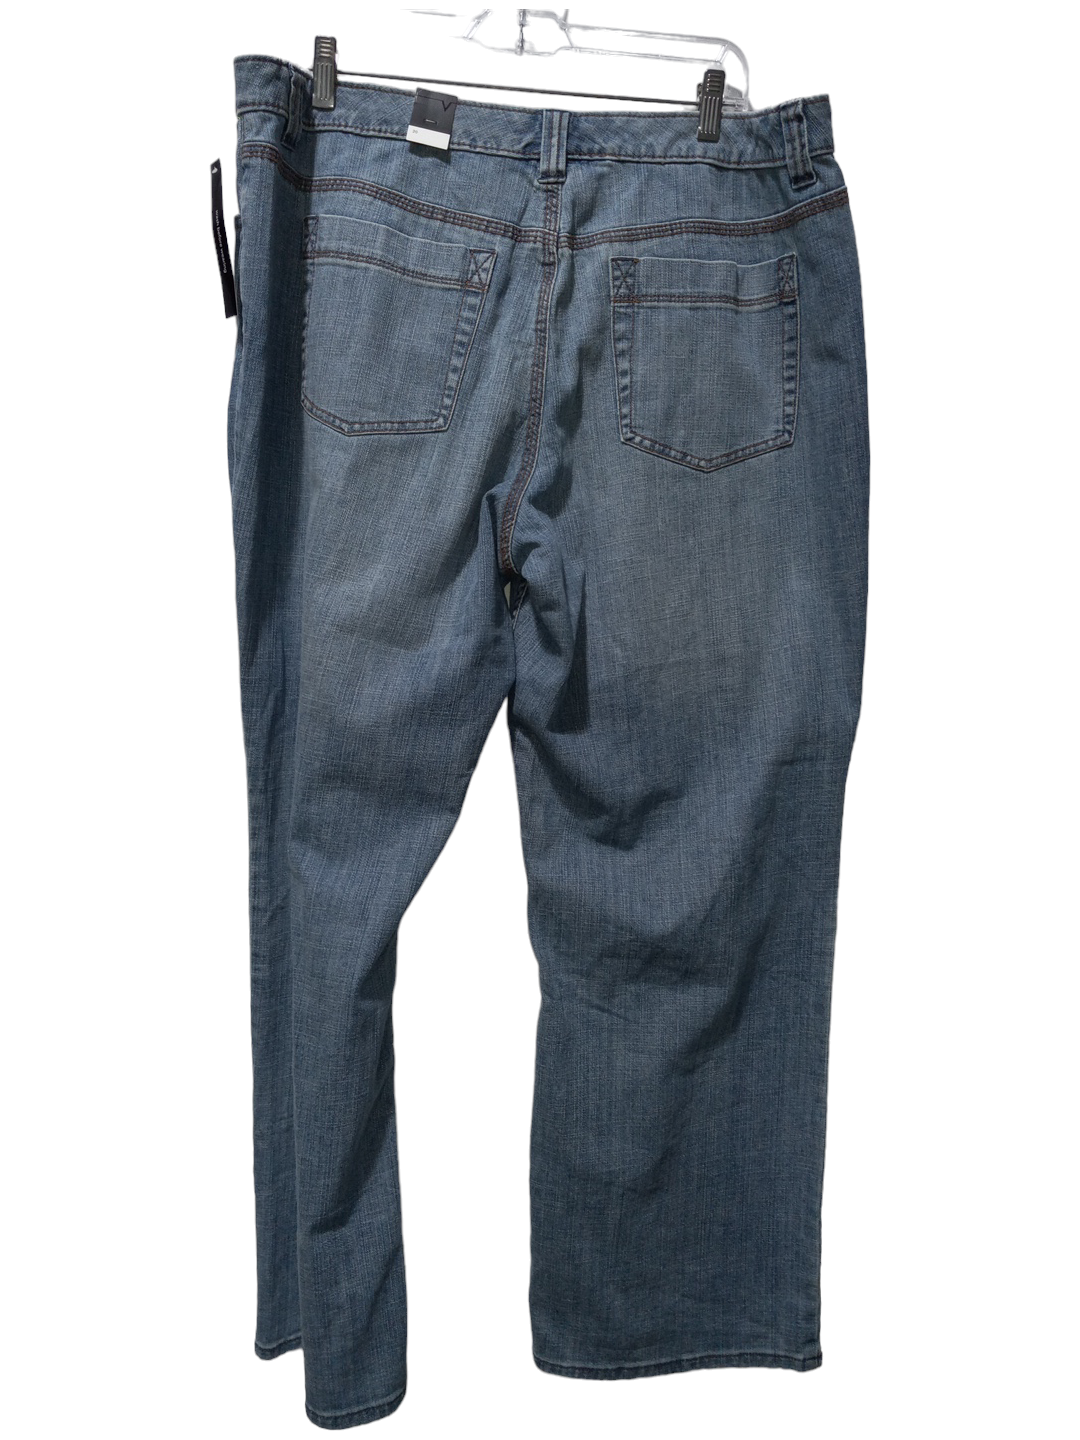 Jeans Boot Cut By Venezia  Size: 2x